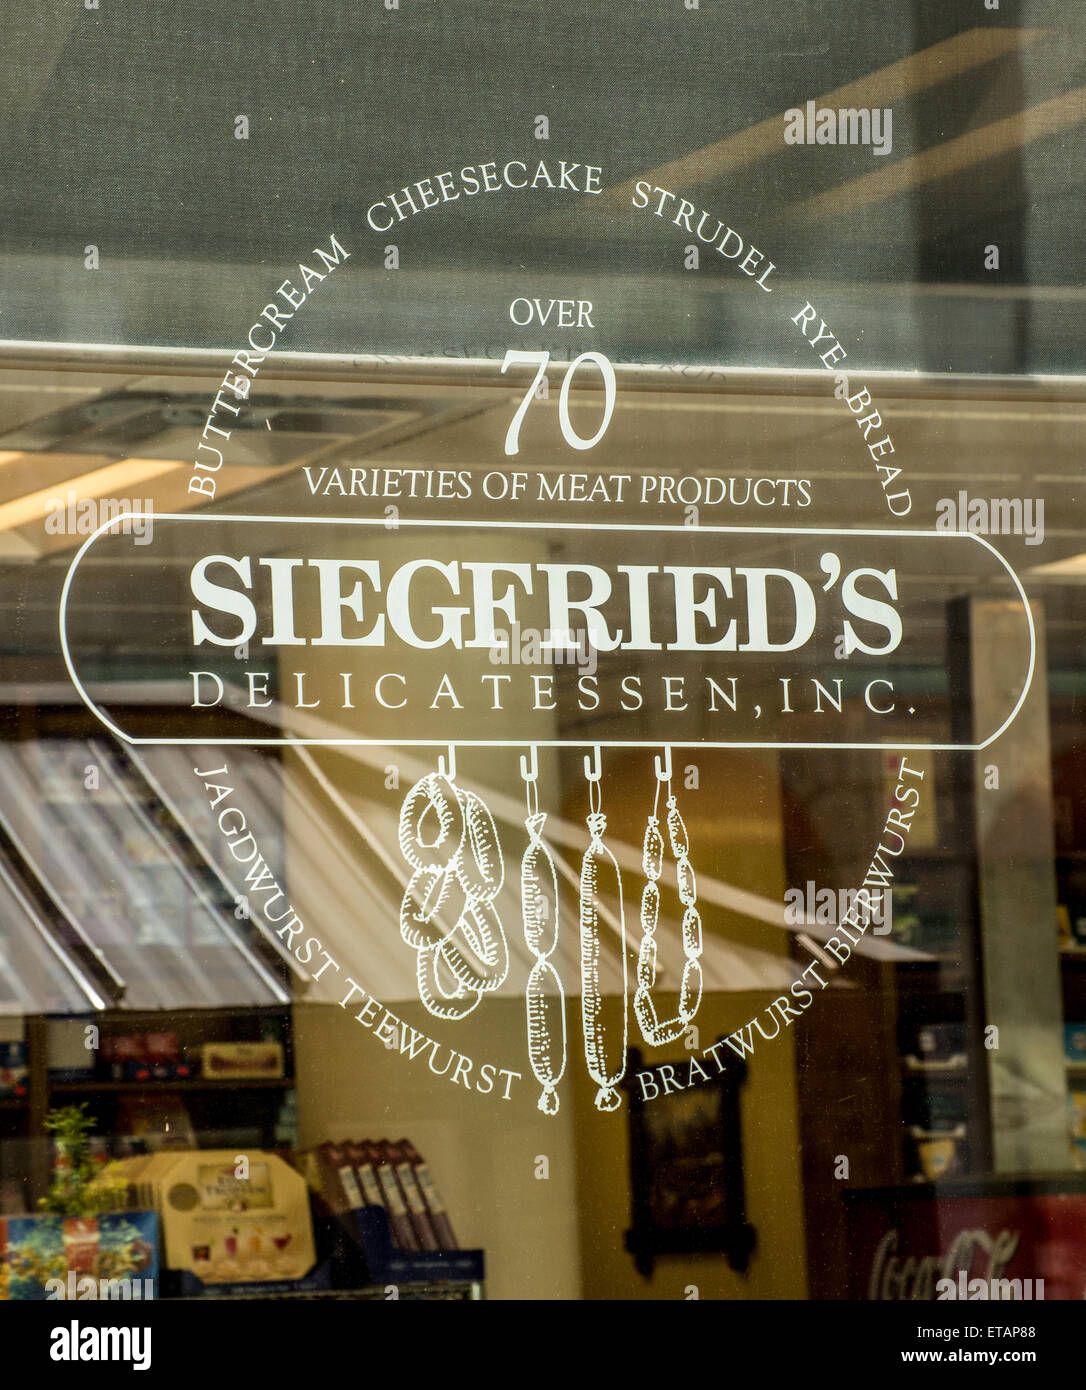 Siegried's Delicastessen, Inc - Salt Lake City - Utah Foto Stock